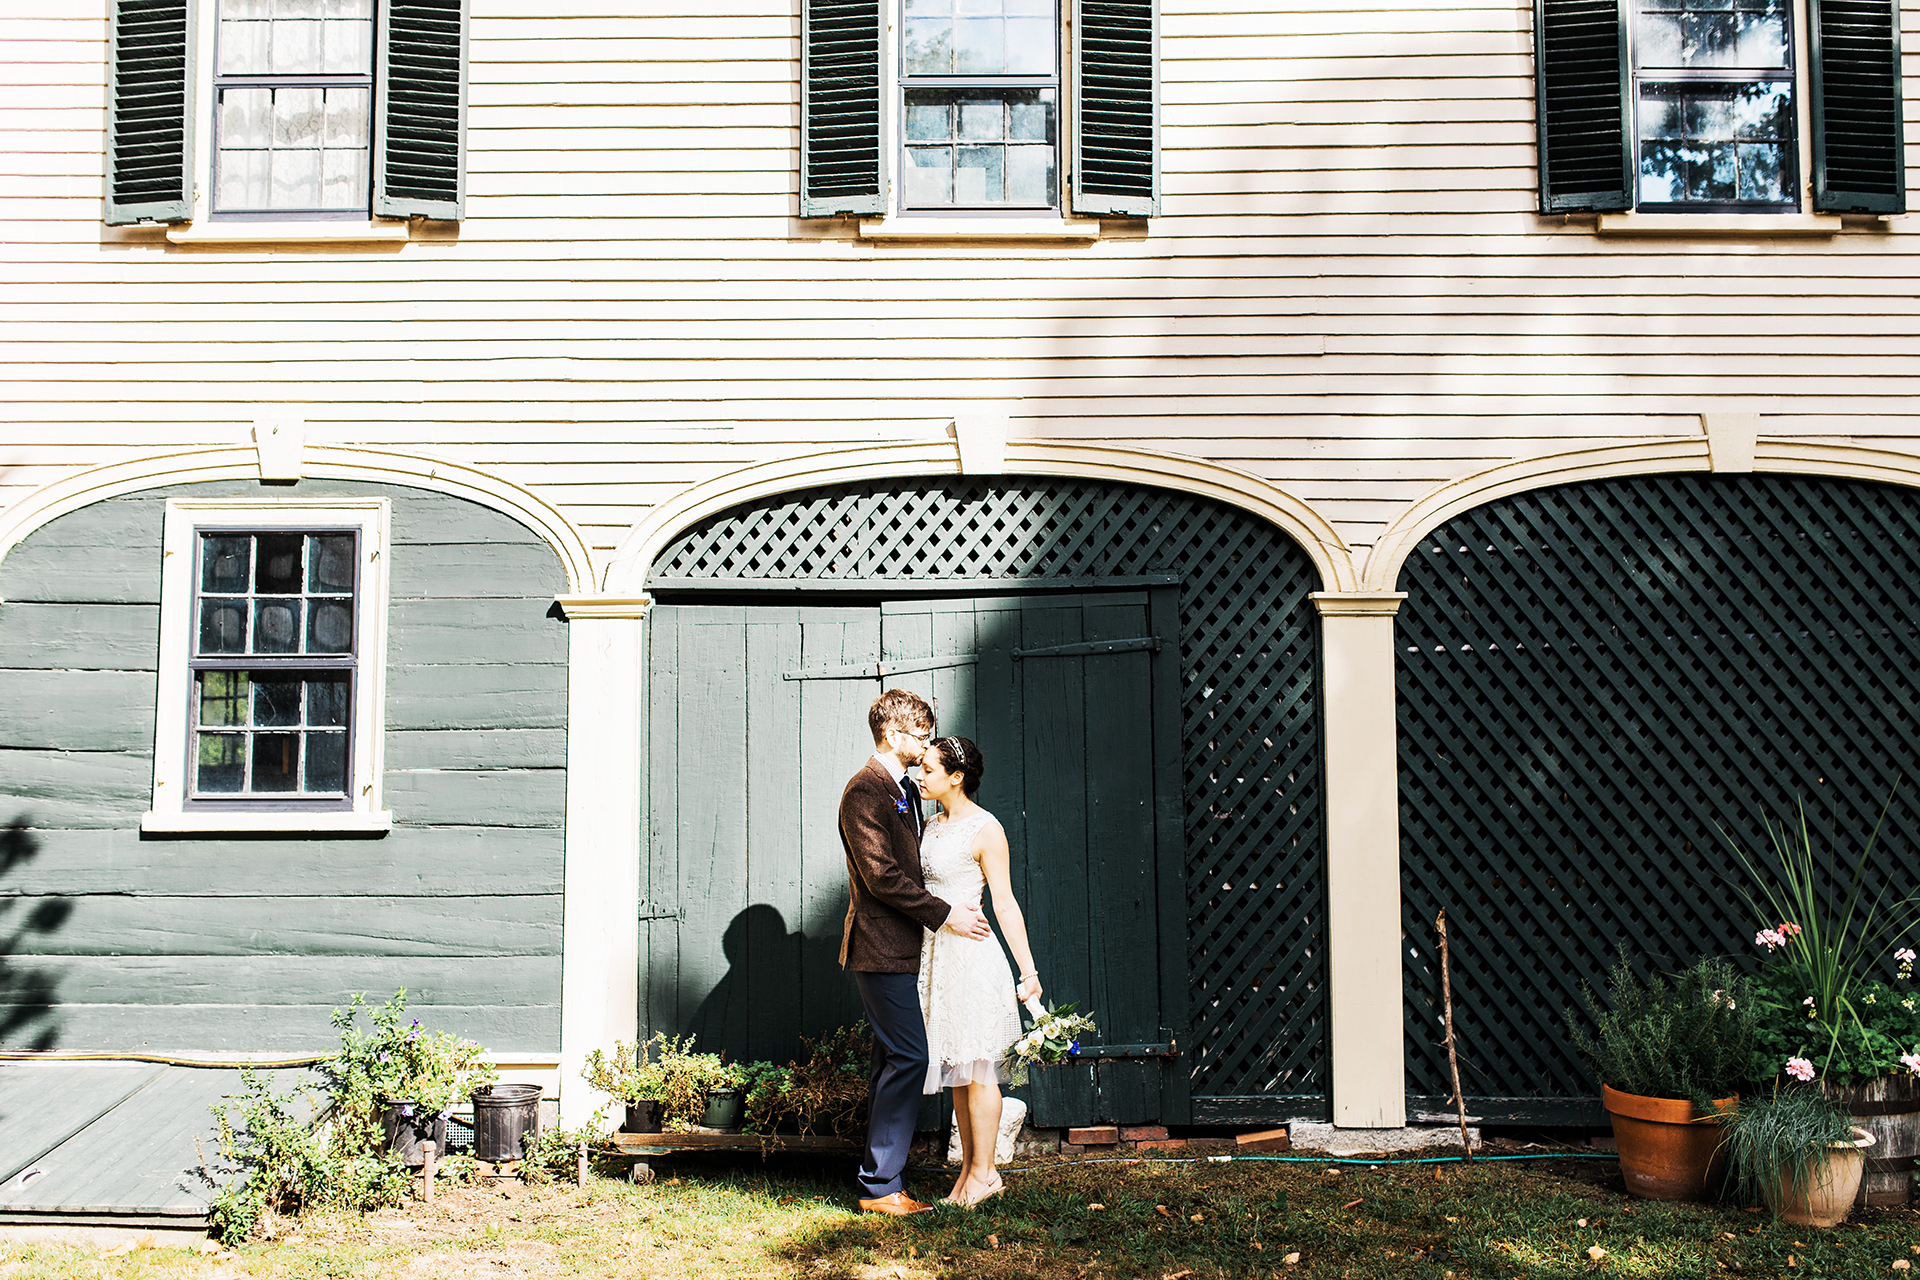 Outdoor Wedding Venues Near Boston - Loring Greenough House